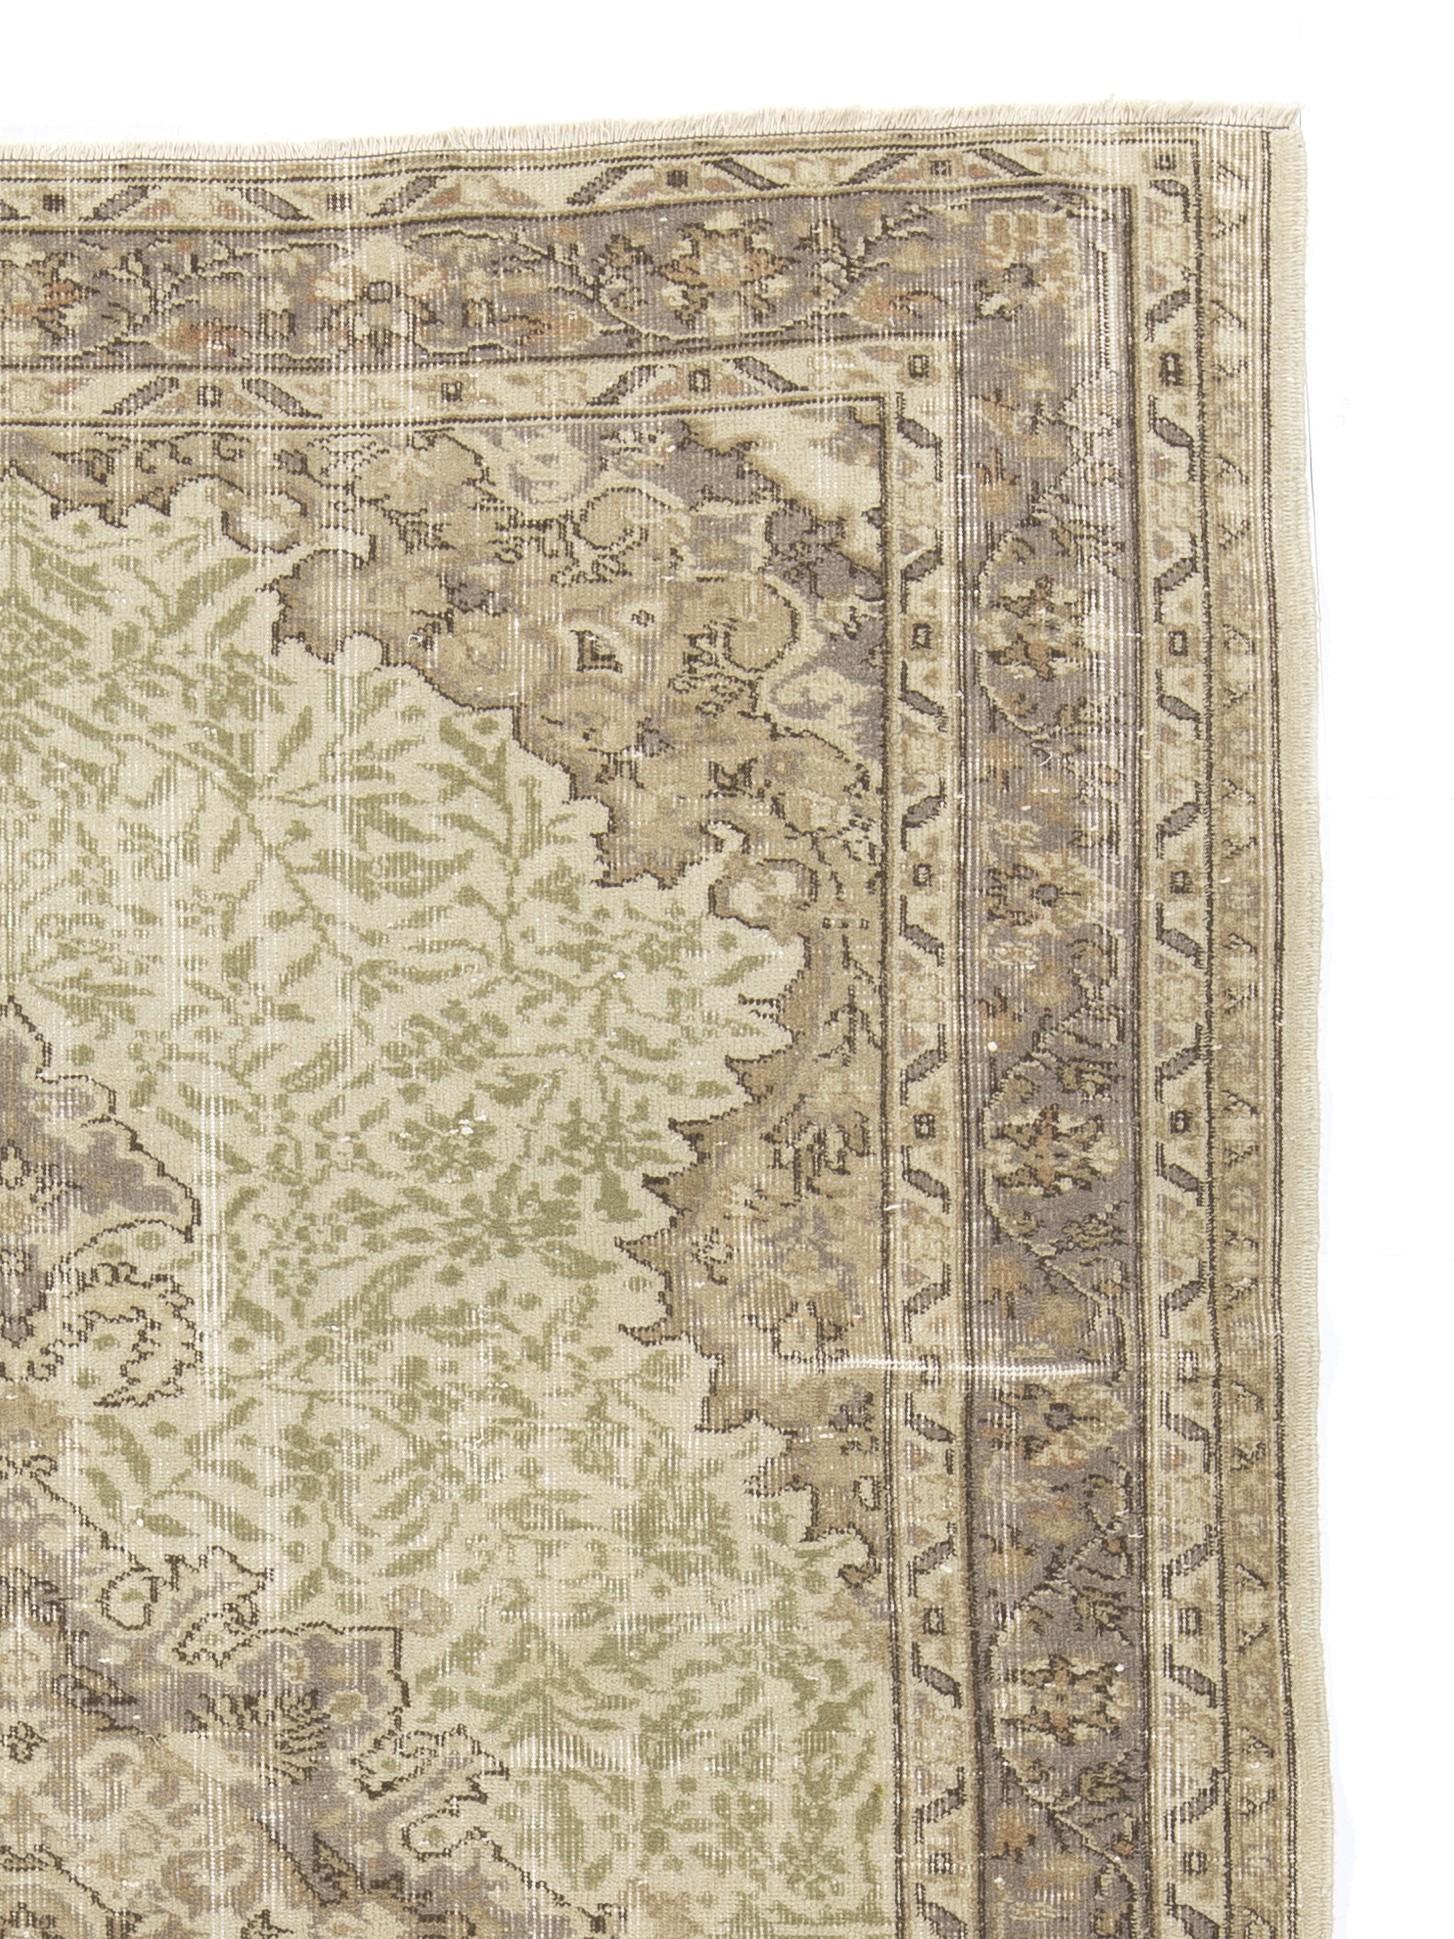 5.6x7.7 Ft Handmade Sun Faded Oushak Area Rug, Medallion Design Wool Carpet In Good Condition For Sale In Philadelphia, PA